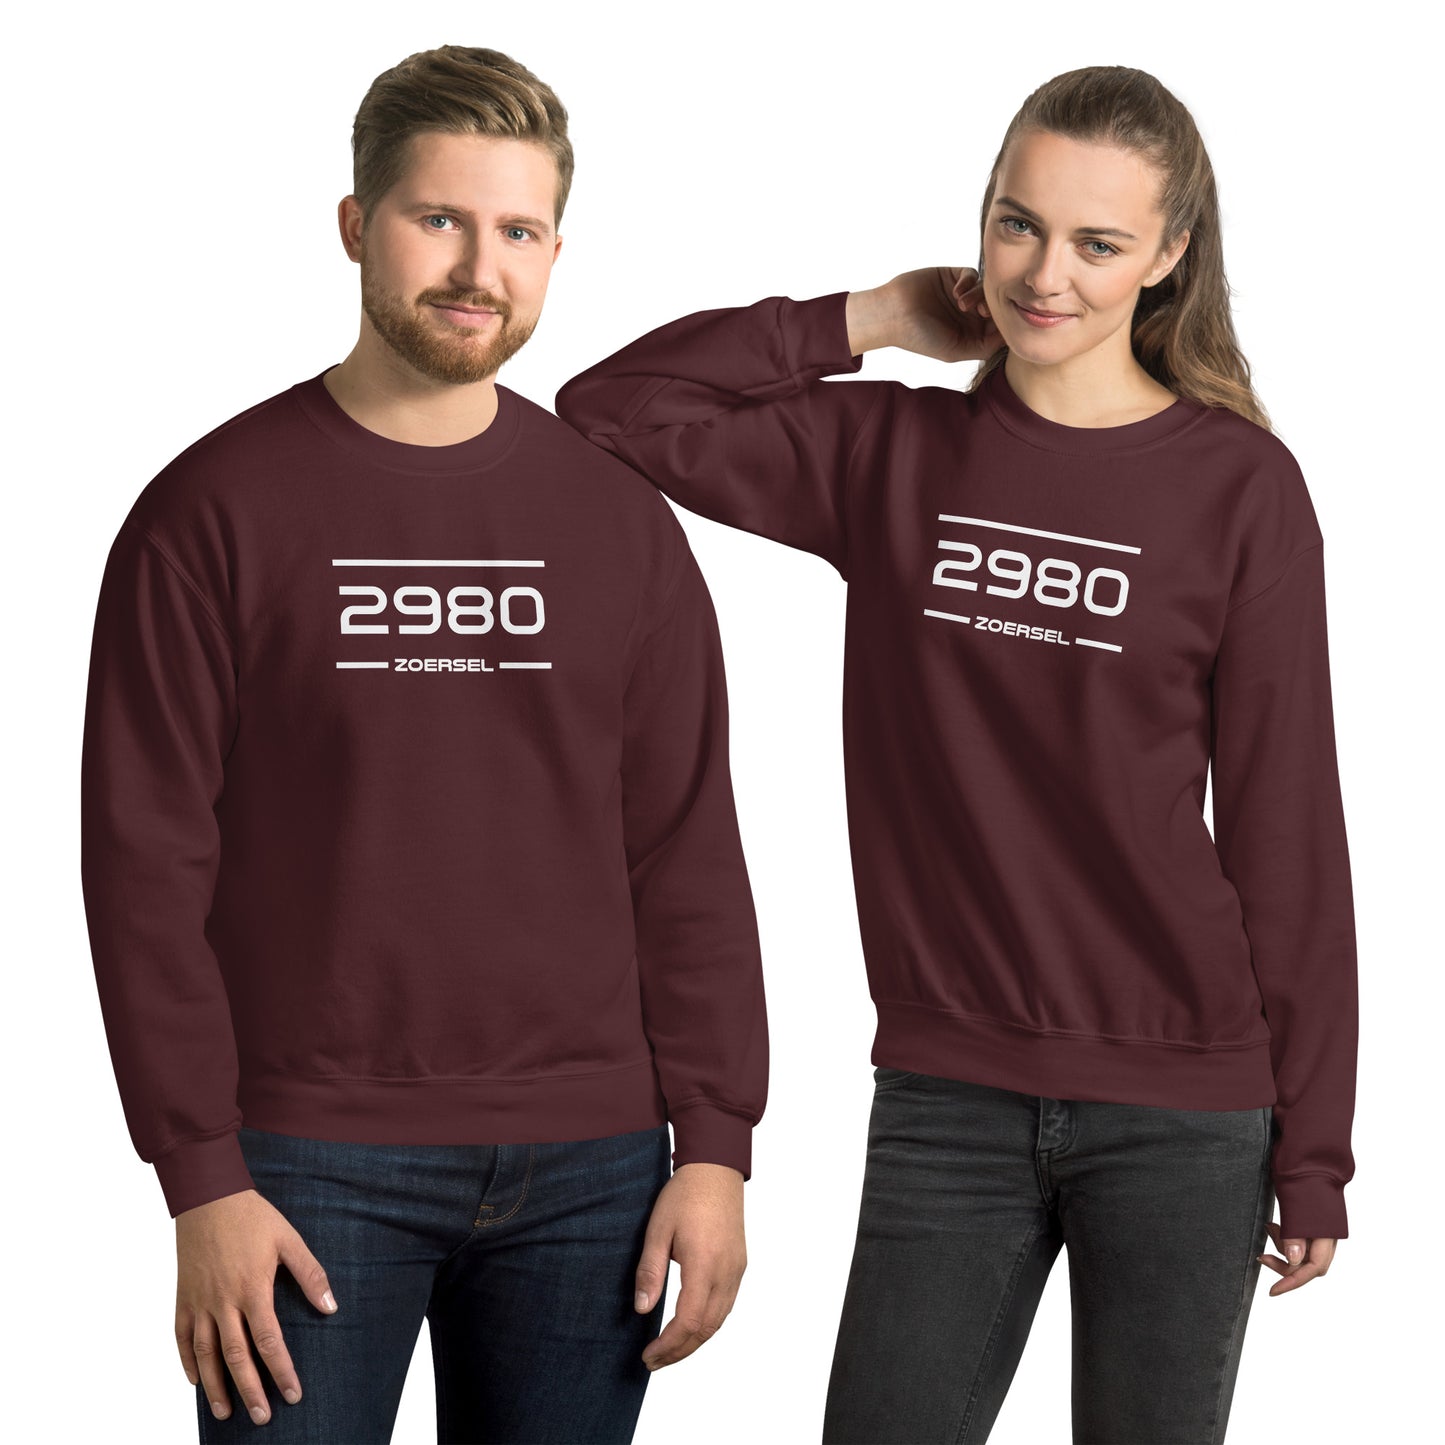 Sweater - 2980 - Zoersel (M/V)